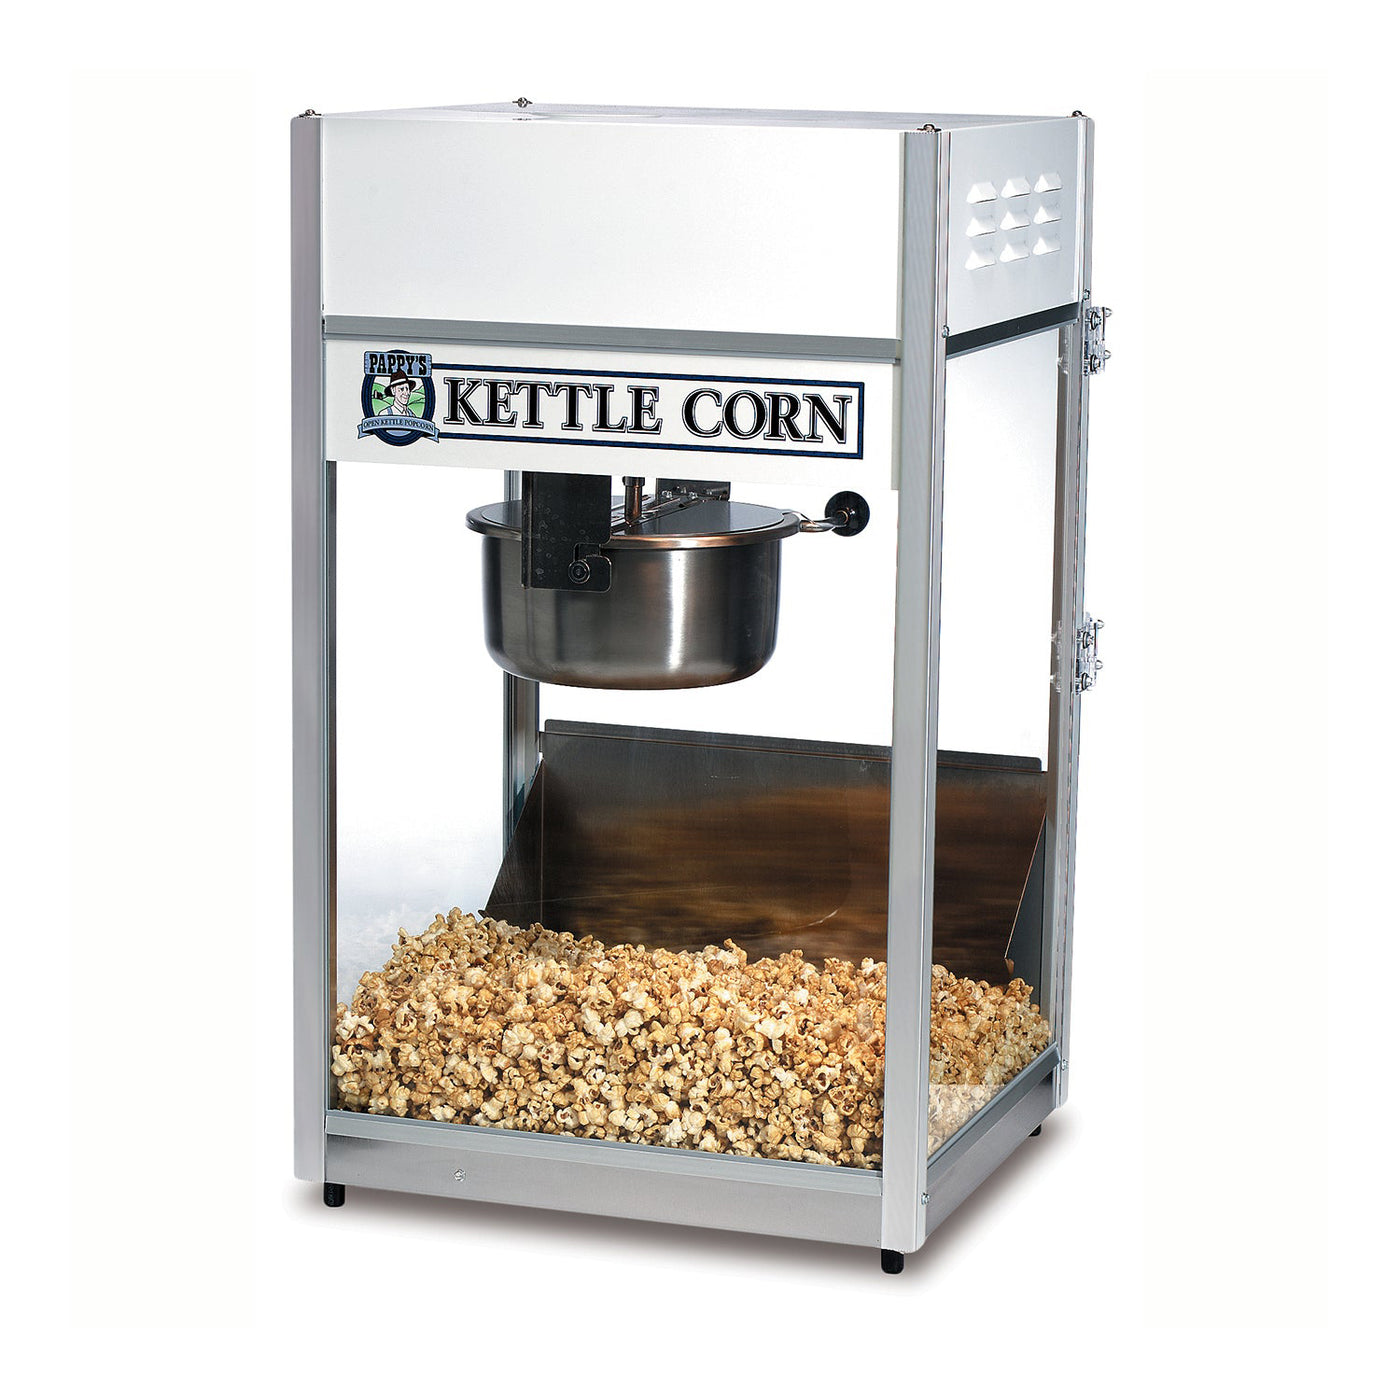 Popcorn Equipment & Supplies Starter Package for a 6-oz. Popcorn Machine  Supplies Starter Package for a 6-oz. Popcorn Machi – Gold Medal Products Co.